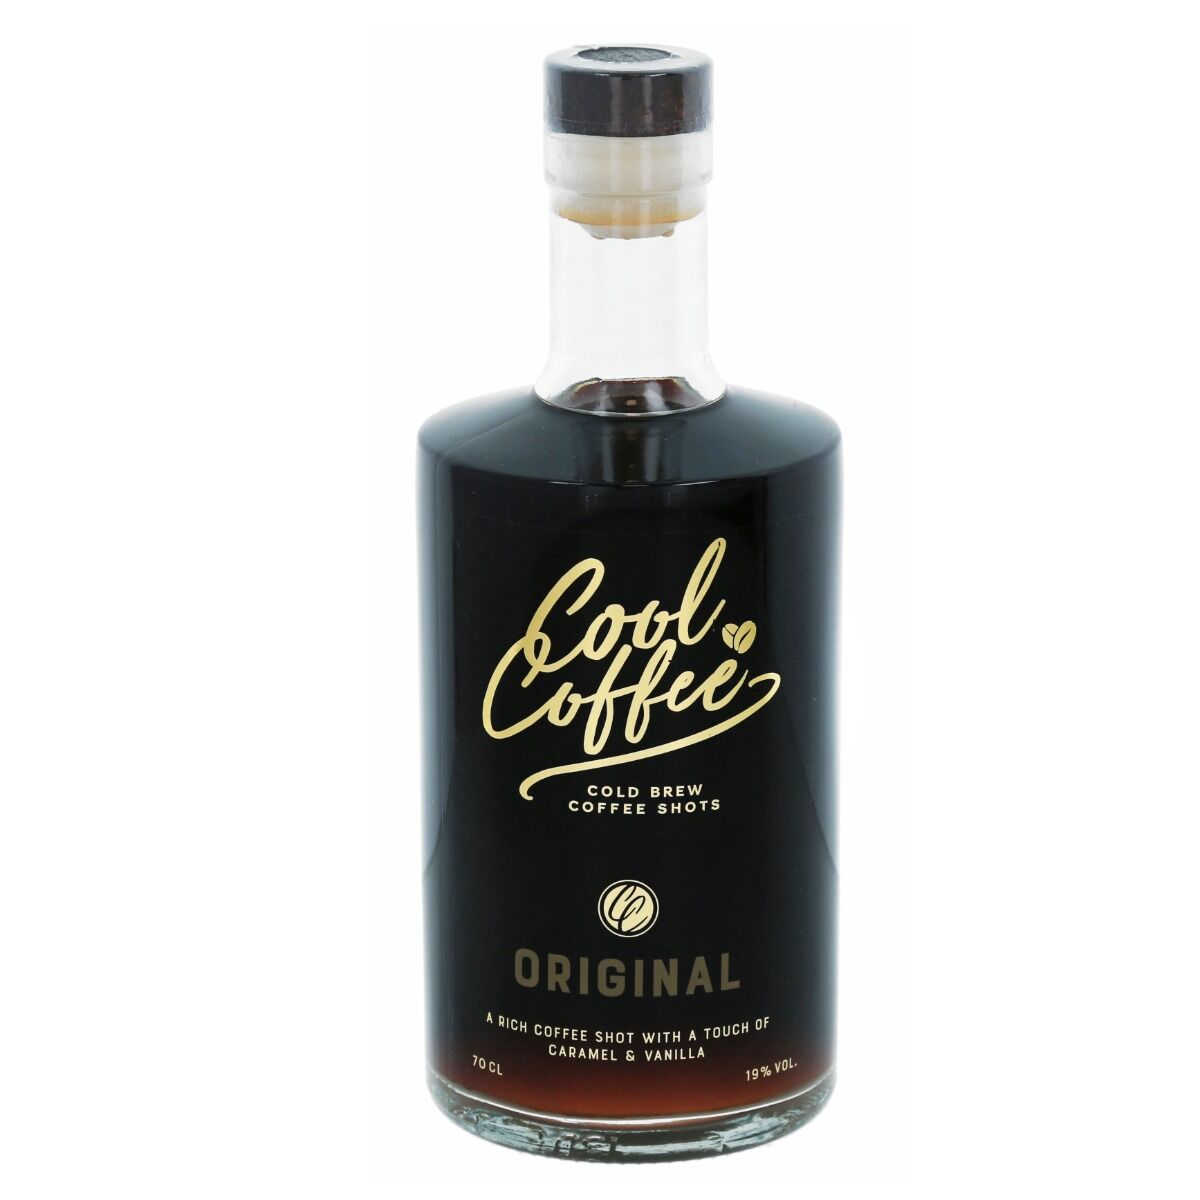 Cool-Coffee Original 70CL